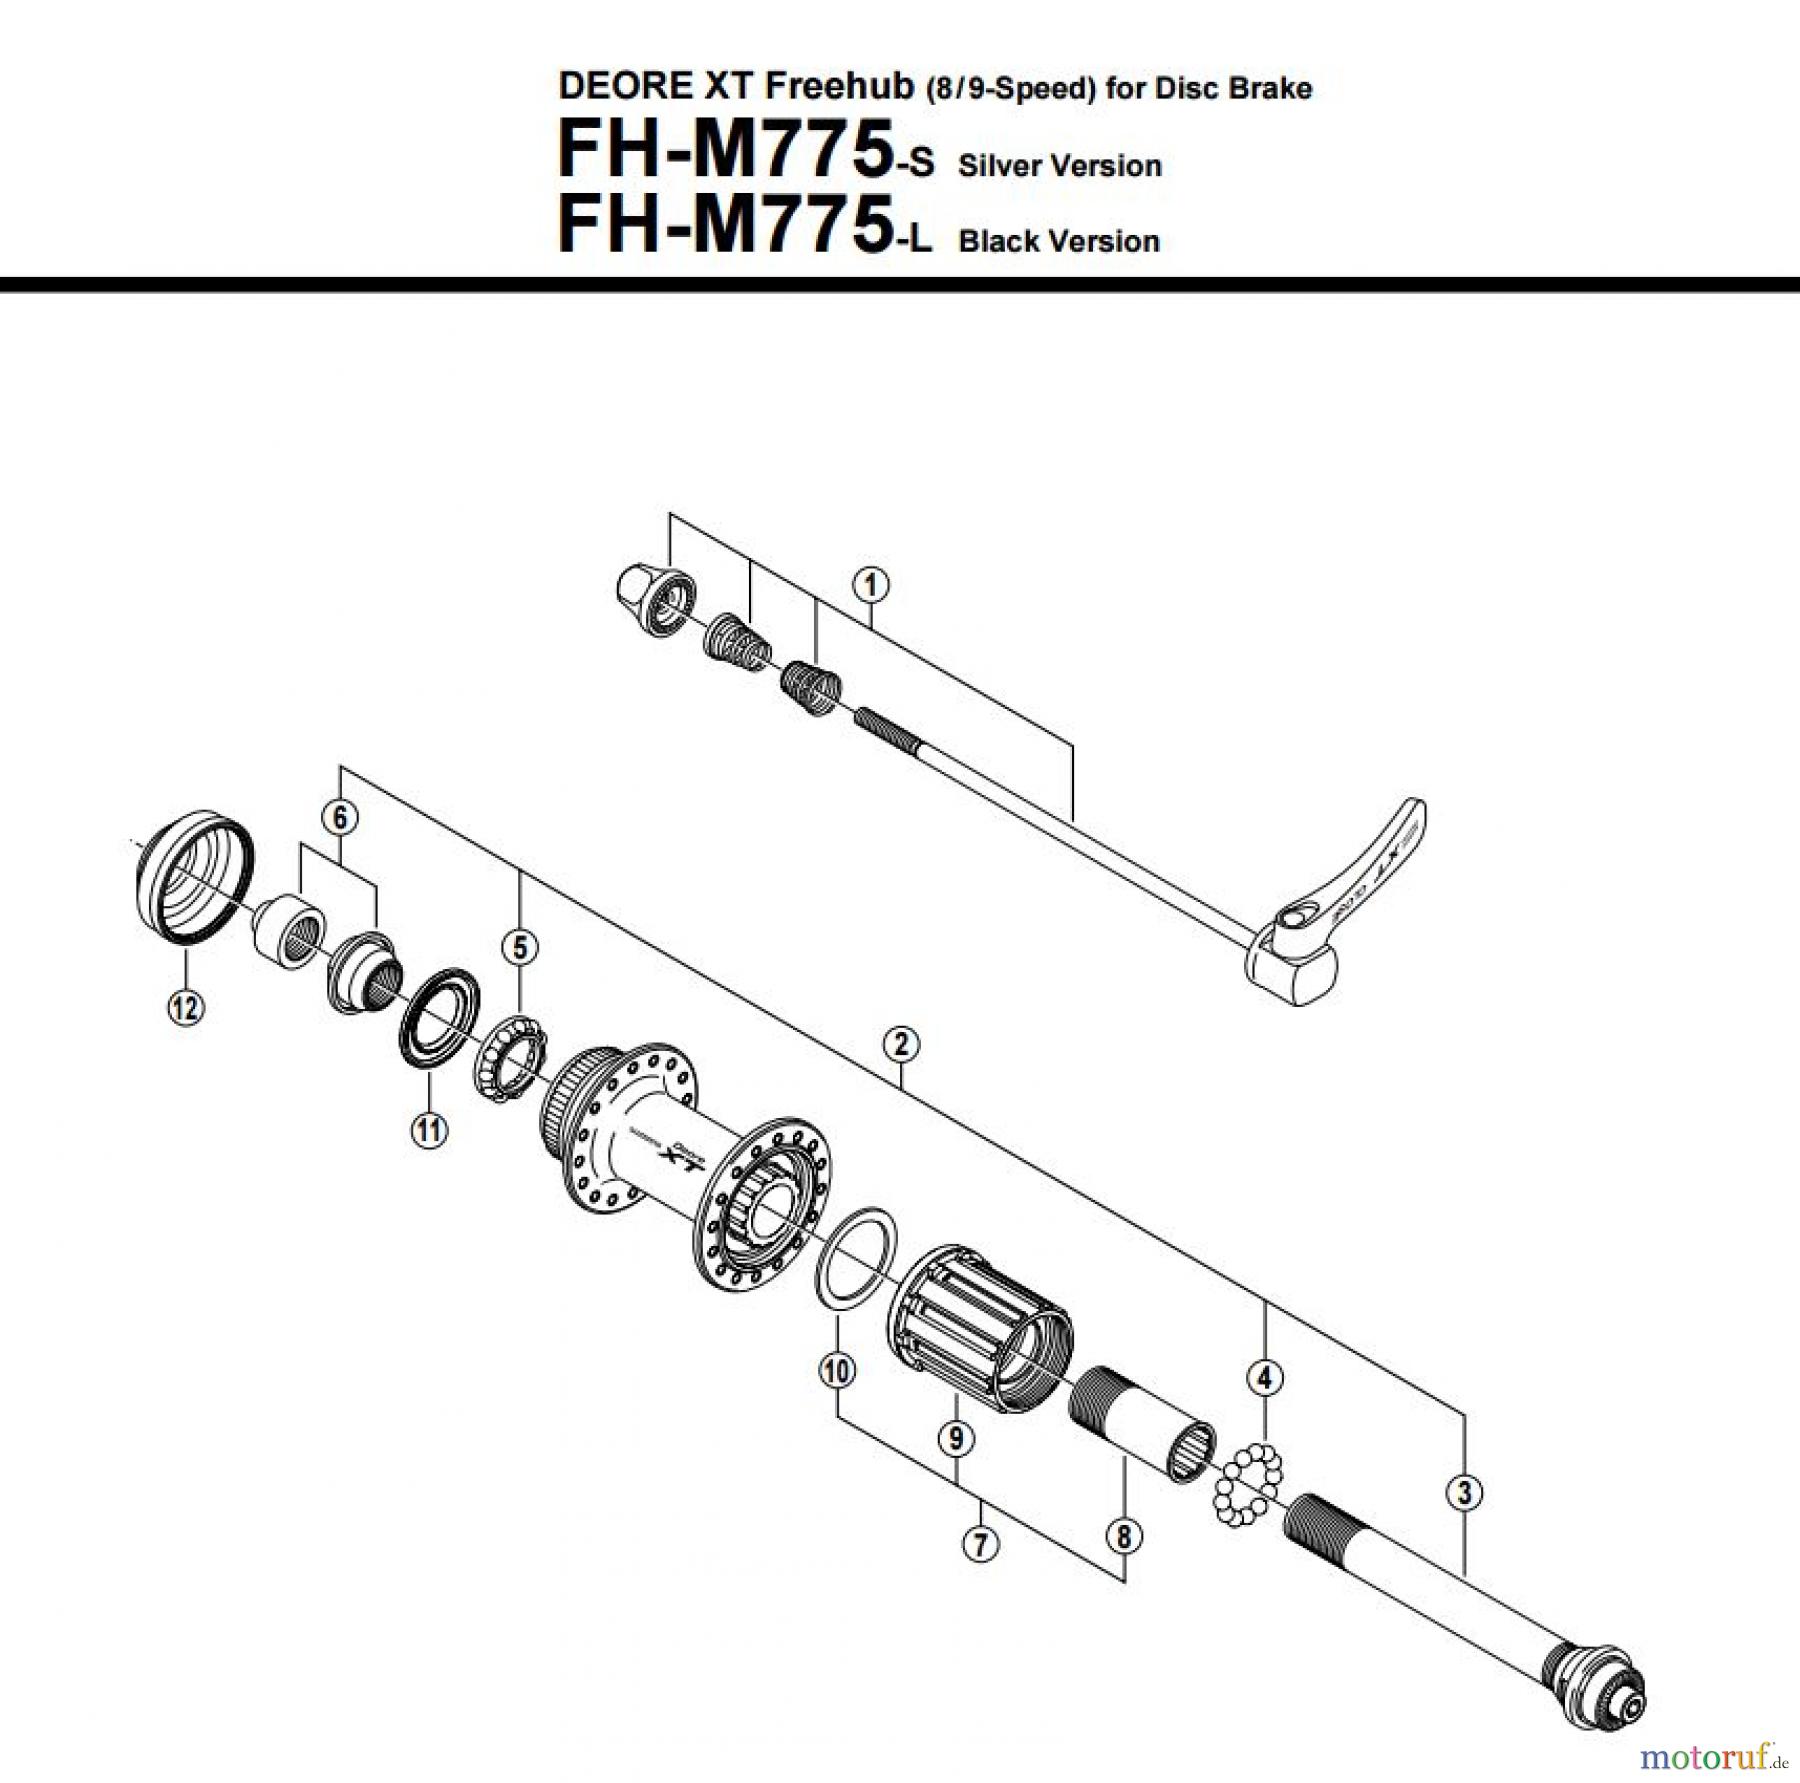  Shimano FH Free Hub - Freilaufnabe FH-M775 -2700A DEORE XT Freehub (8/9-Speed) for Disc Brake